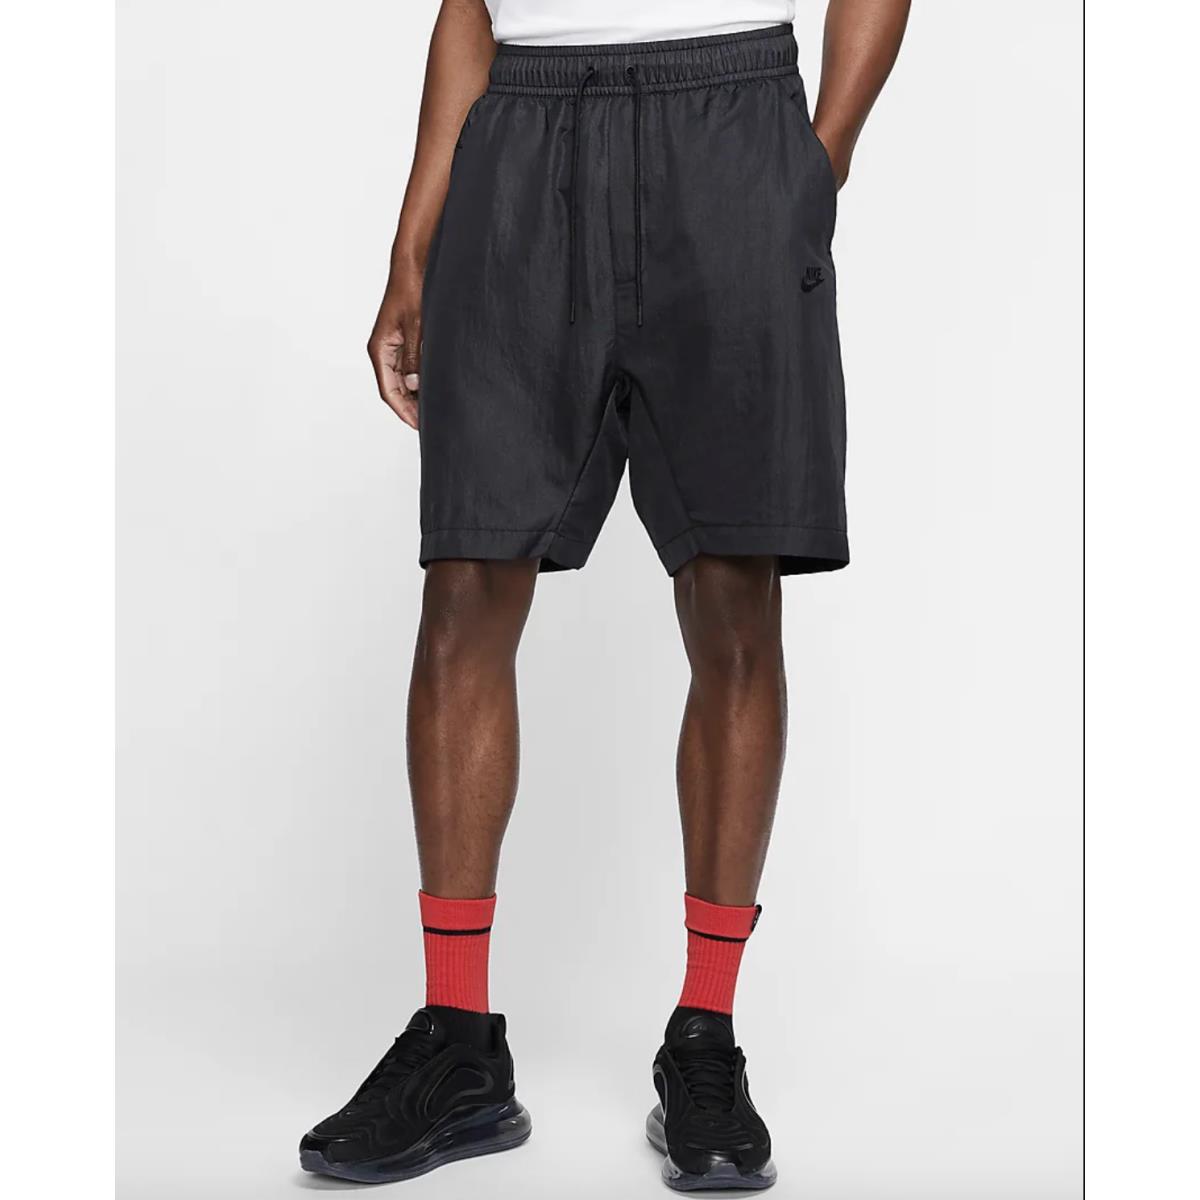 Nike Sportswear Tech Pack Woven Shorts Size M Pure Black AR3229 010 Sample